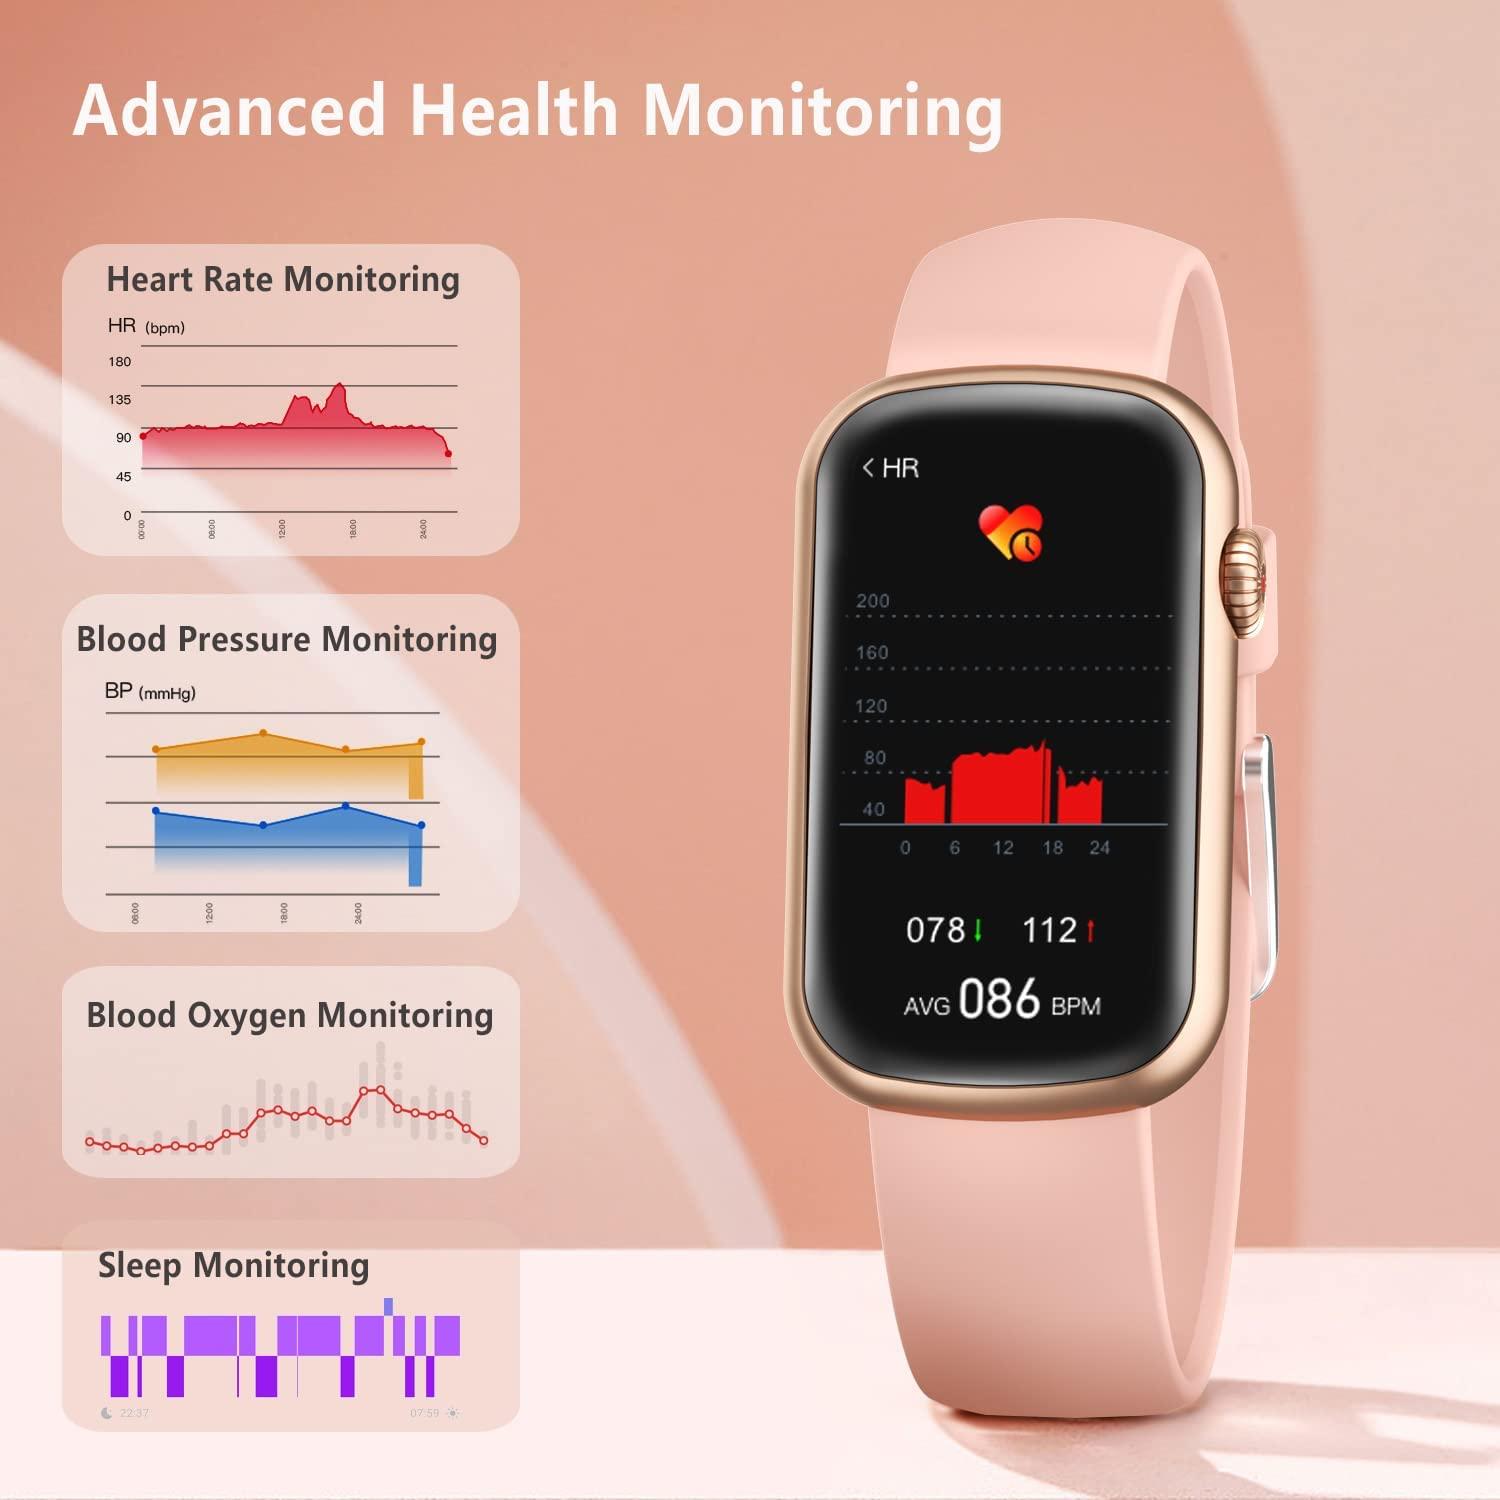 Health Smart Digital Blood Pressure Monitor Pink